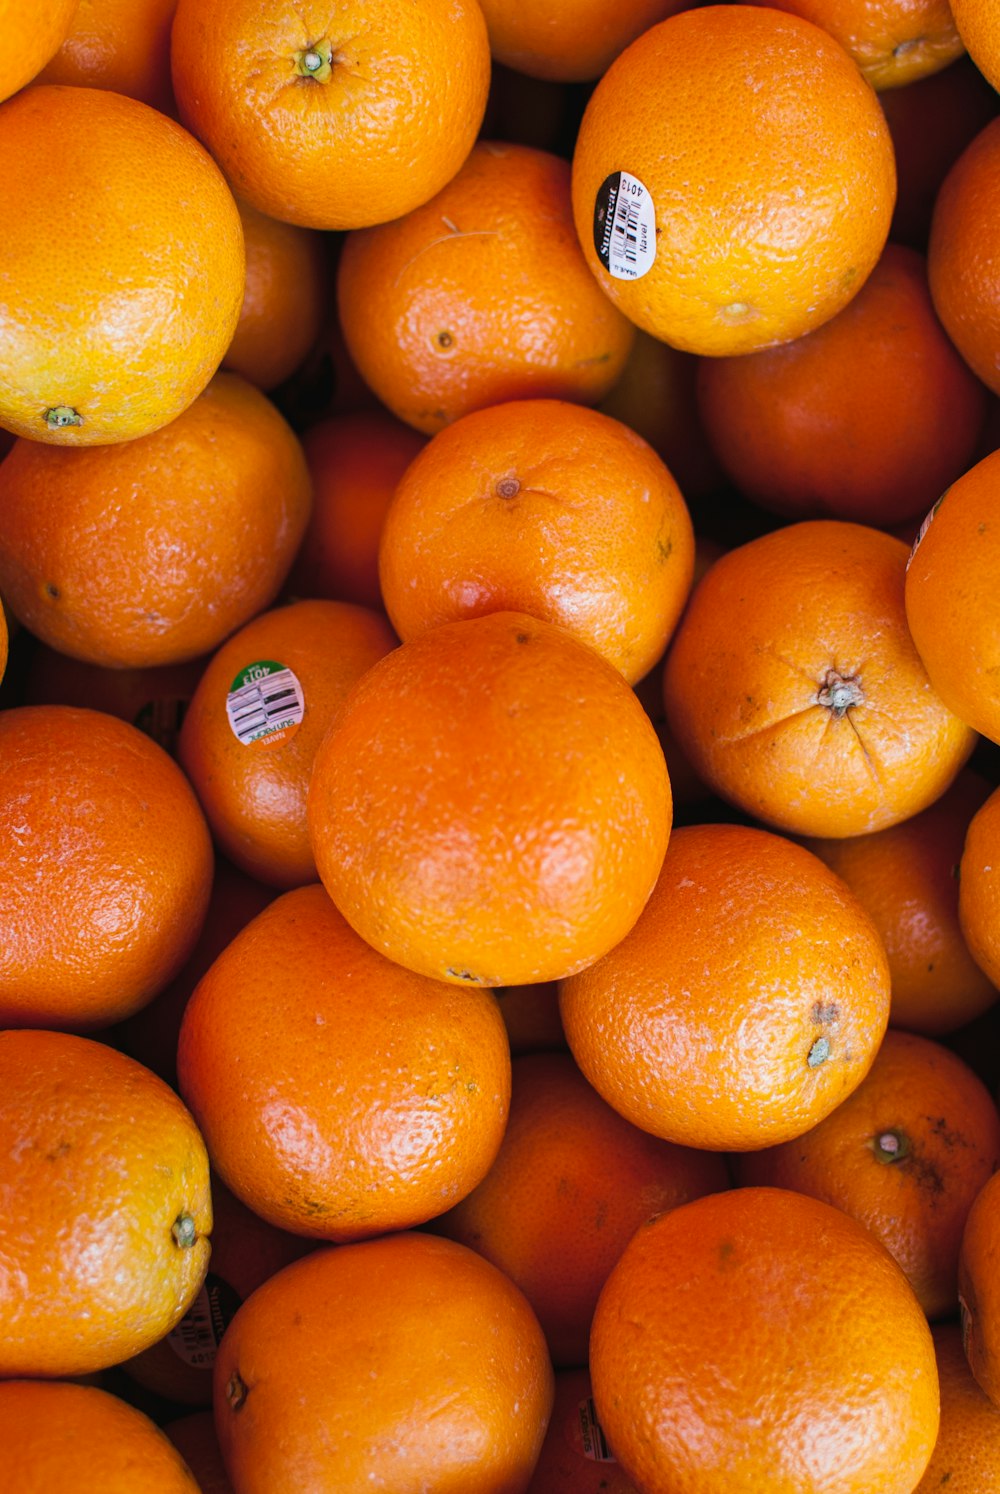 orange fruits on display